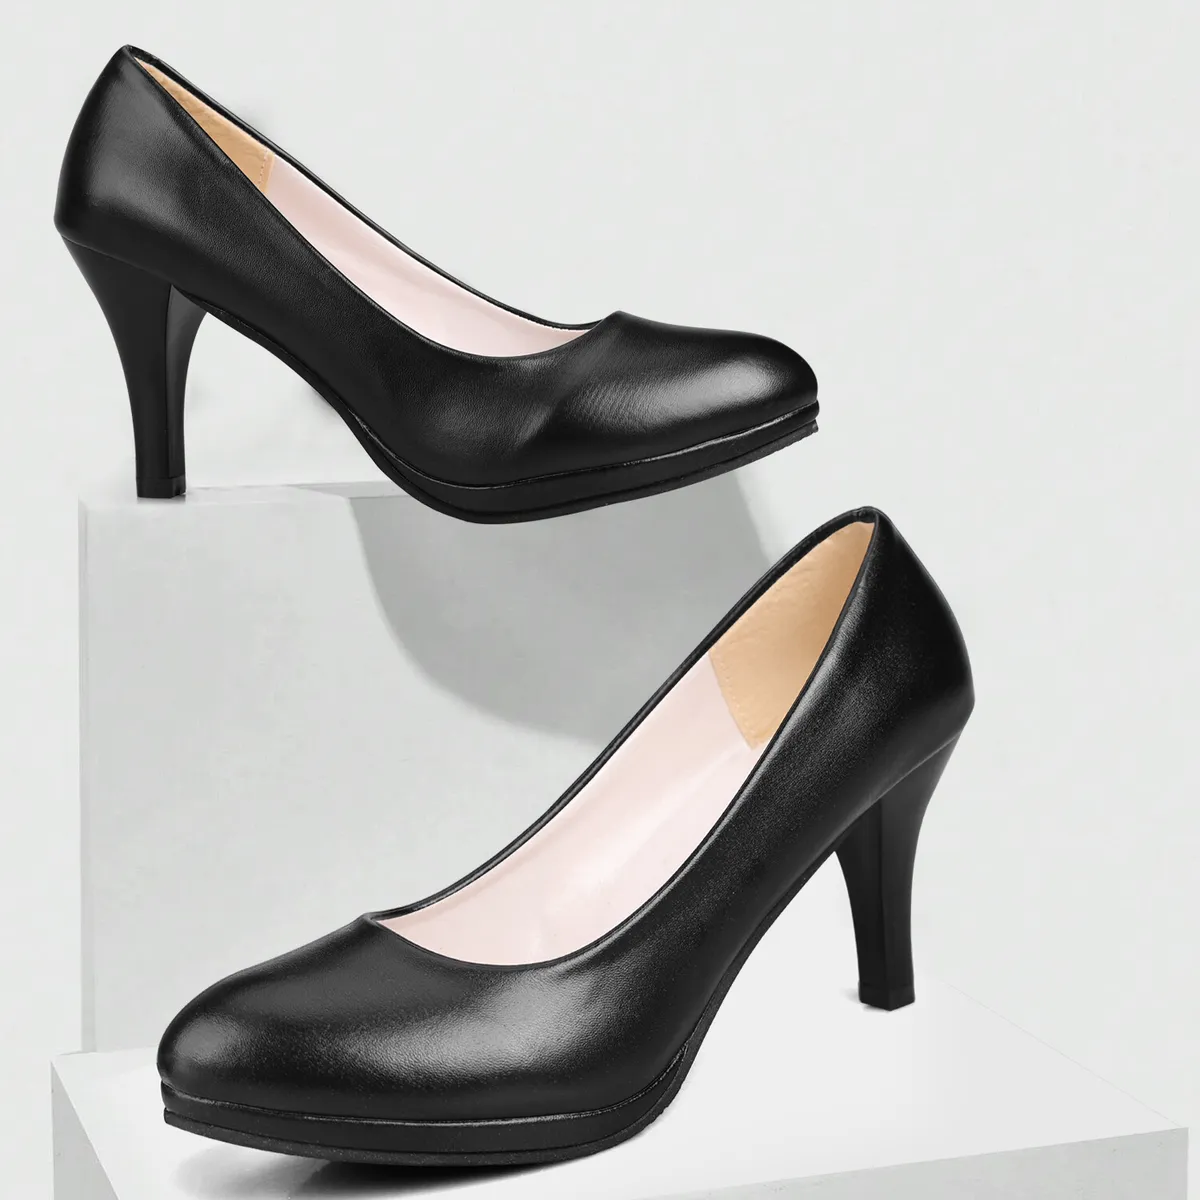 Black Patent 80s Classic Pumps Stiletto High Heels Formal Bridesmaid Shoes  | eBay